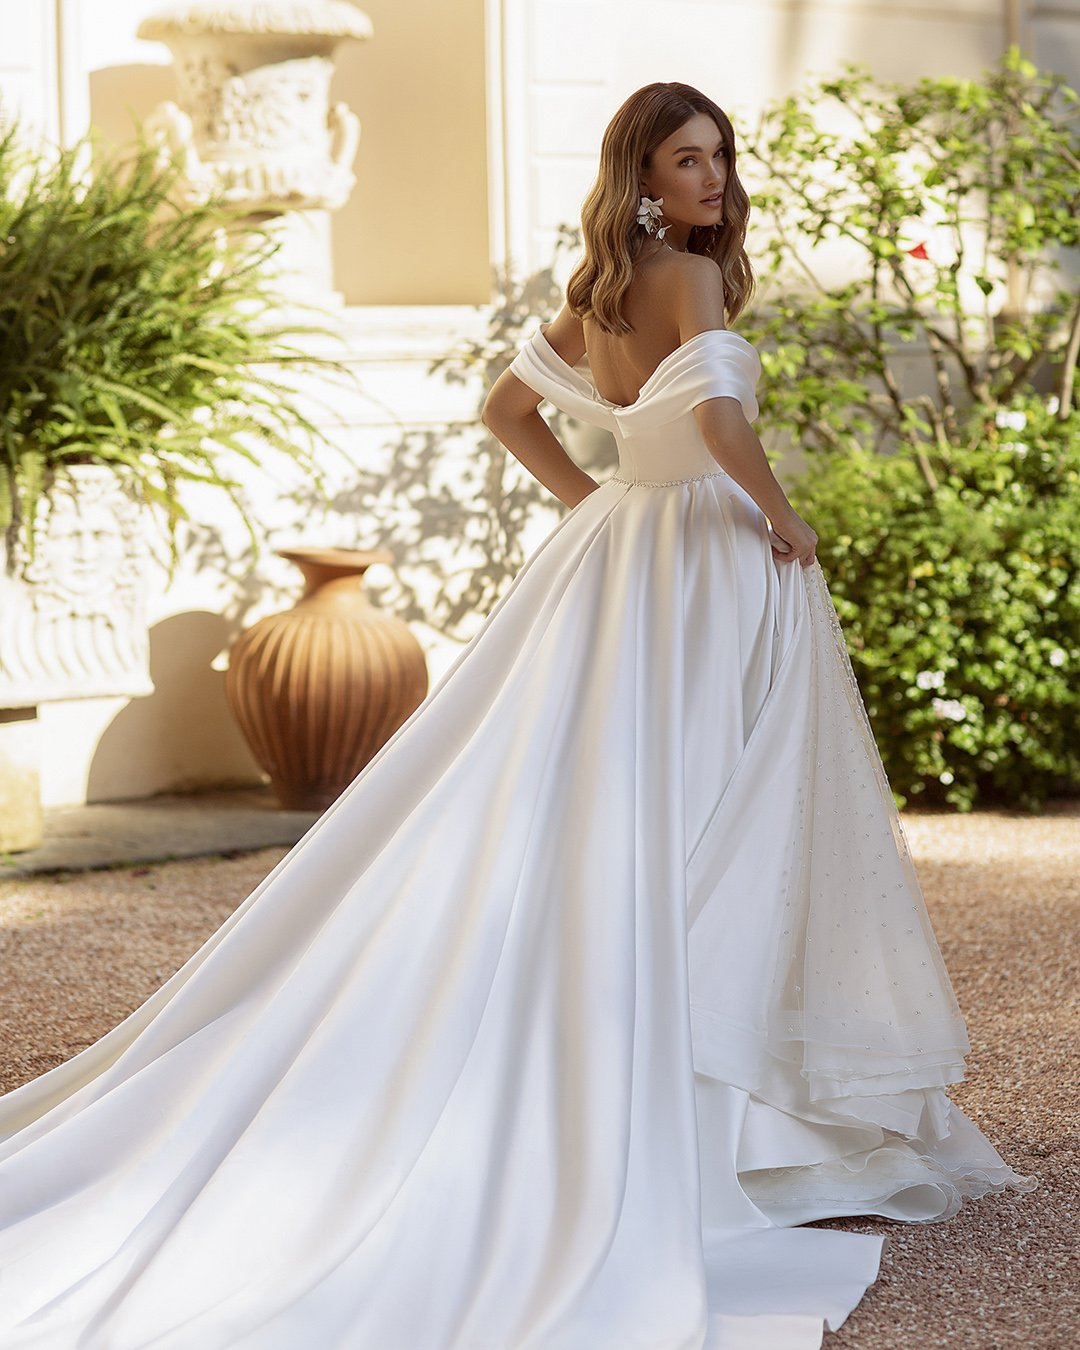 disney wedding dresses simple ball gown off the shoulder belle tina valerdi